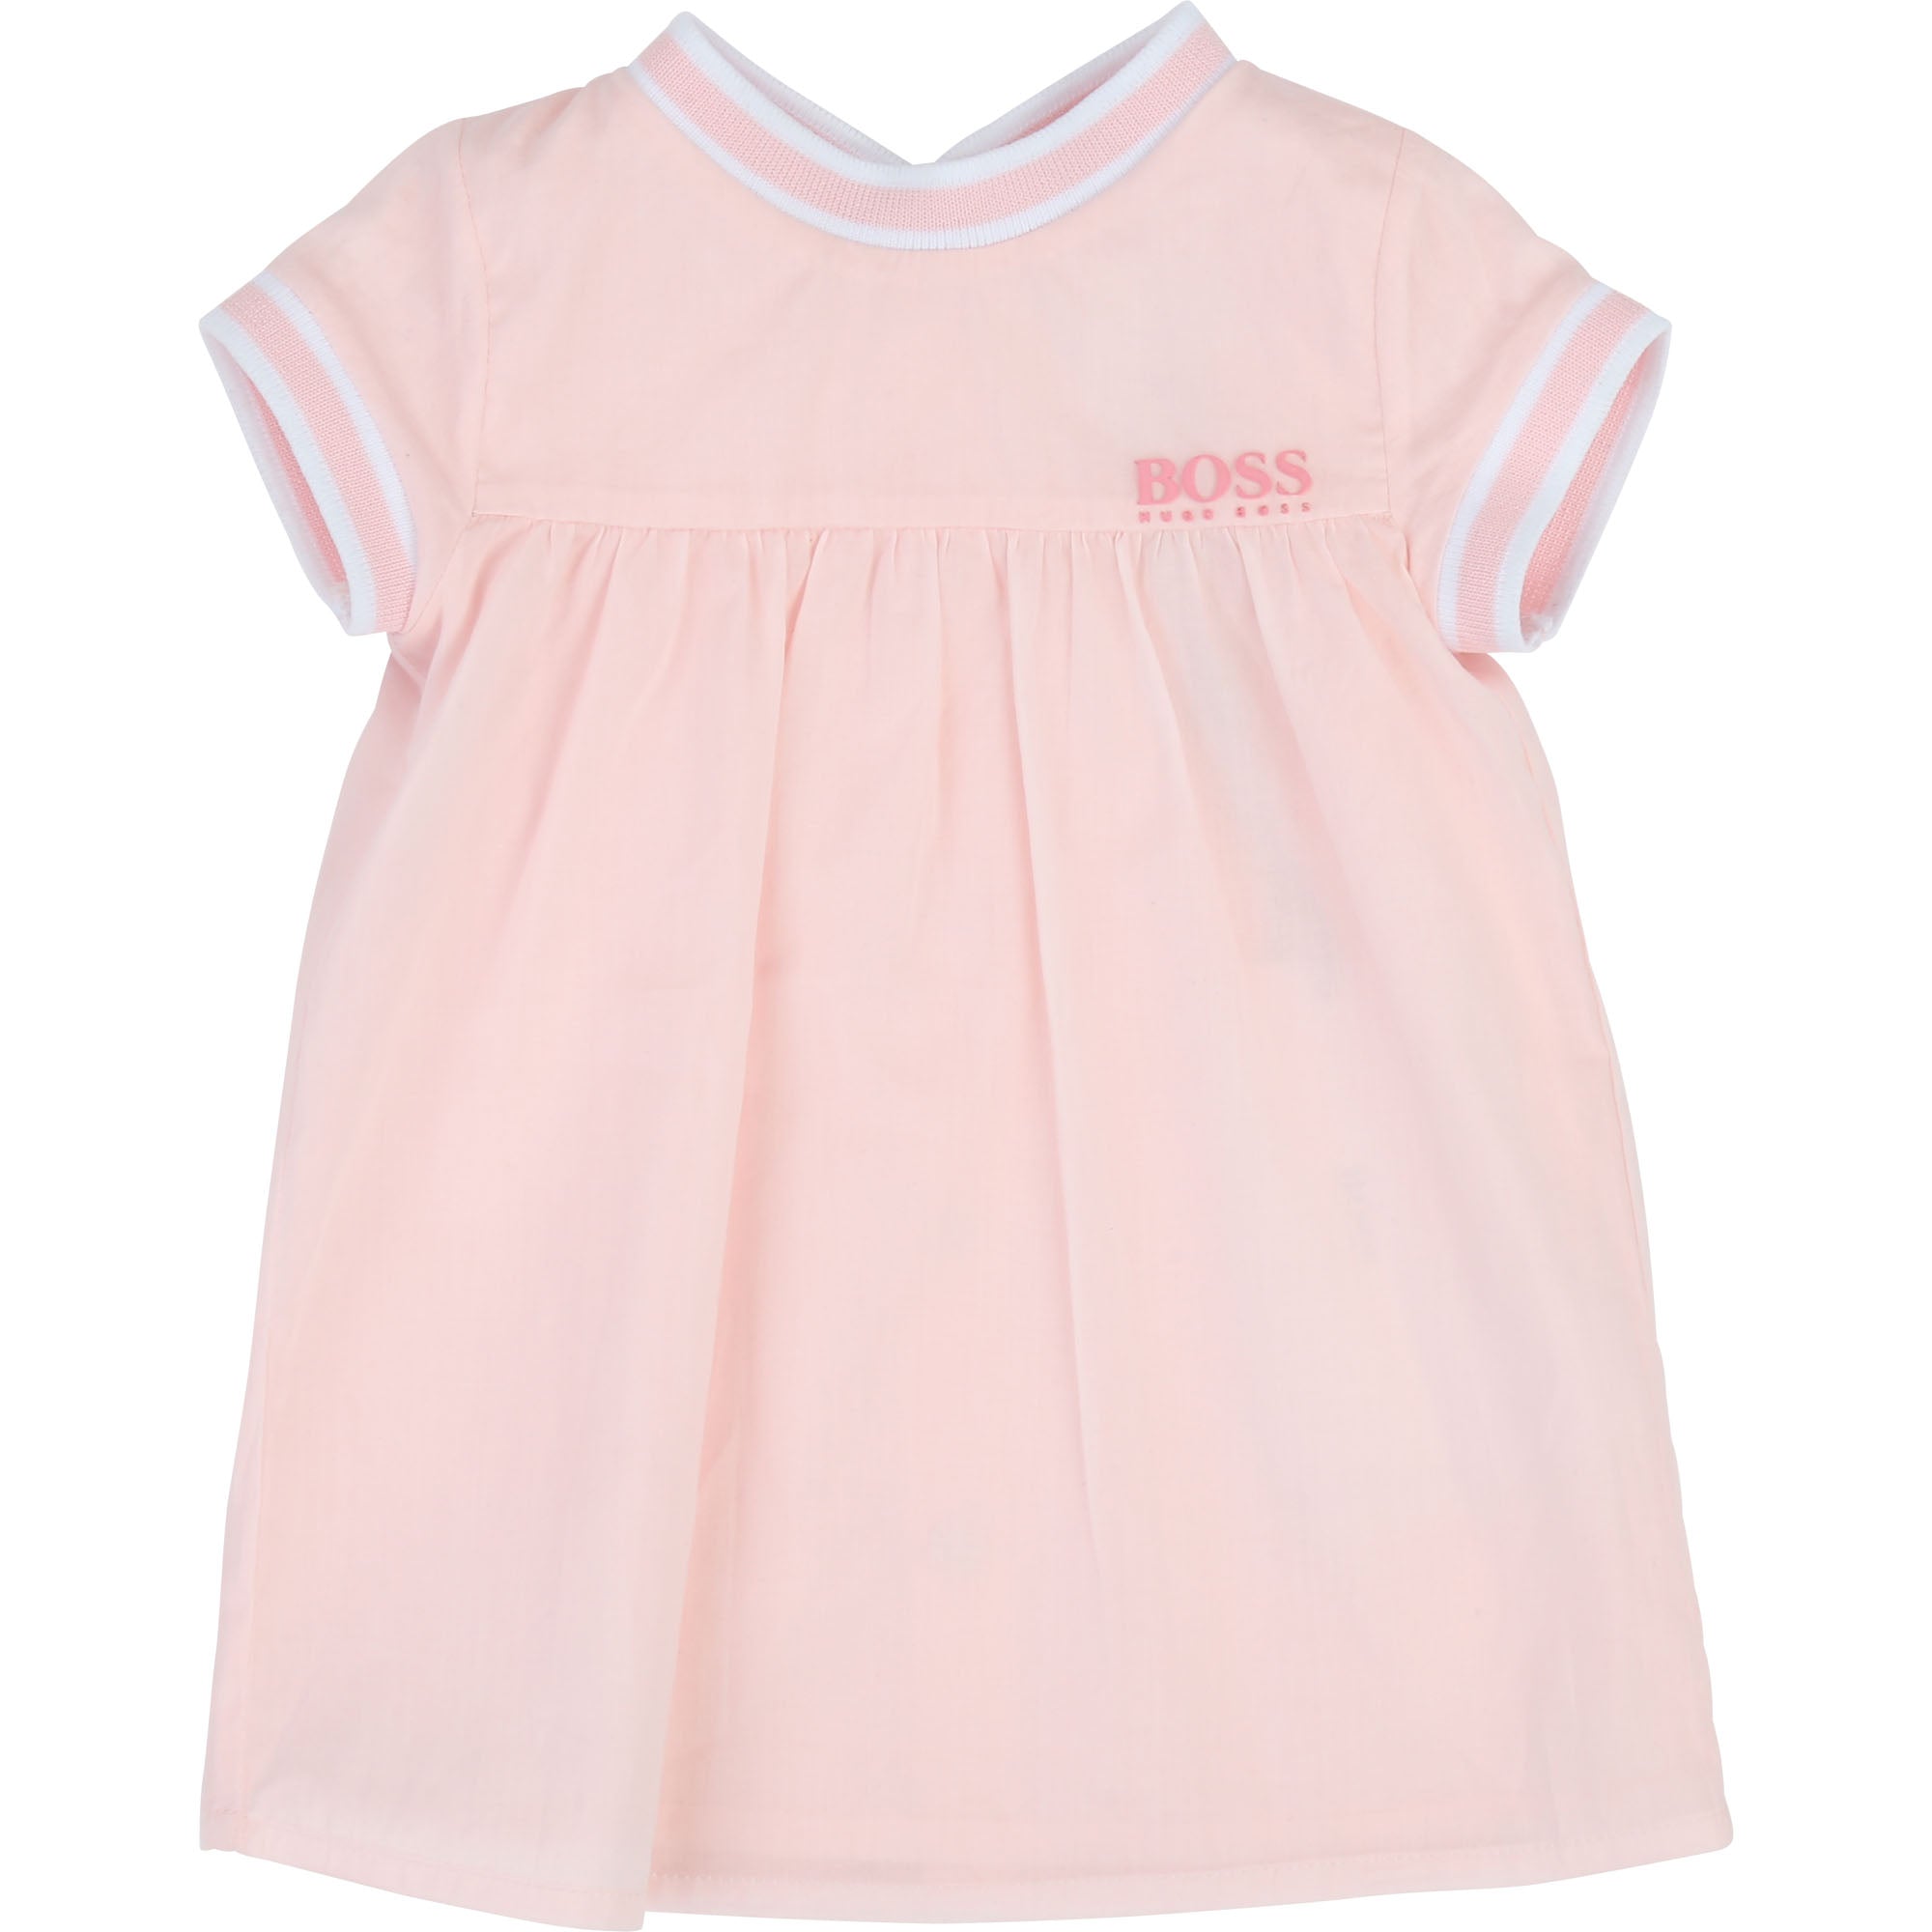 Baby Girls Pale Pink Cotton Dress